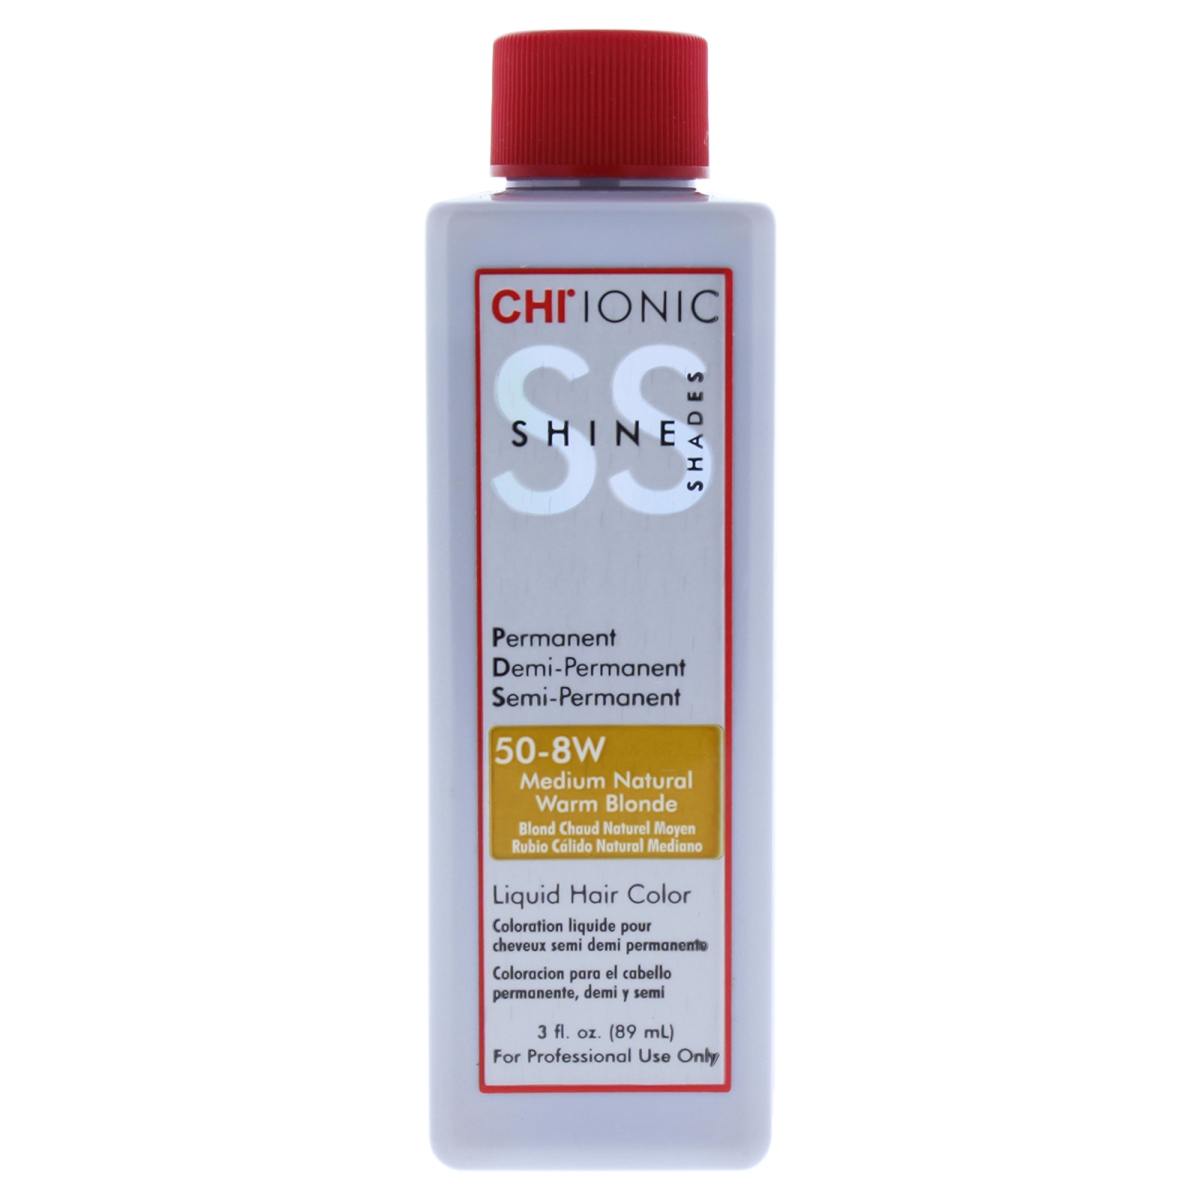 I0084024 Ionic Shine Shades Liquid Hair Color For Unisex - 50-8w Medium Natural Warm Blonde - 3 Oz